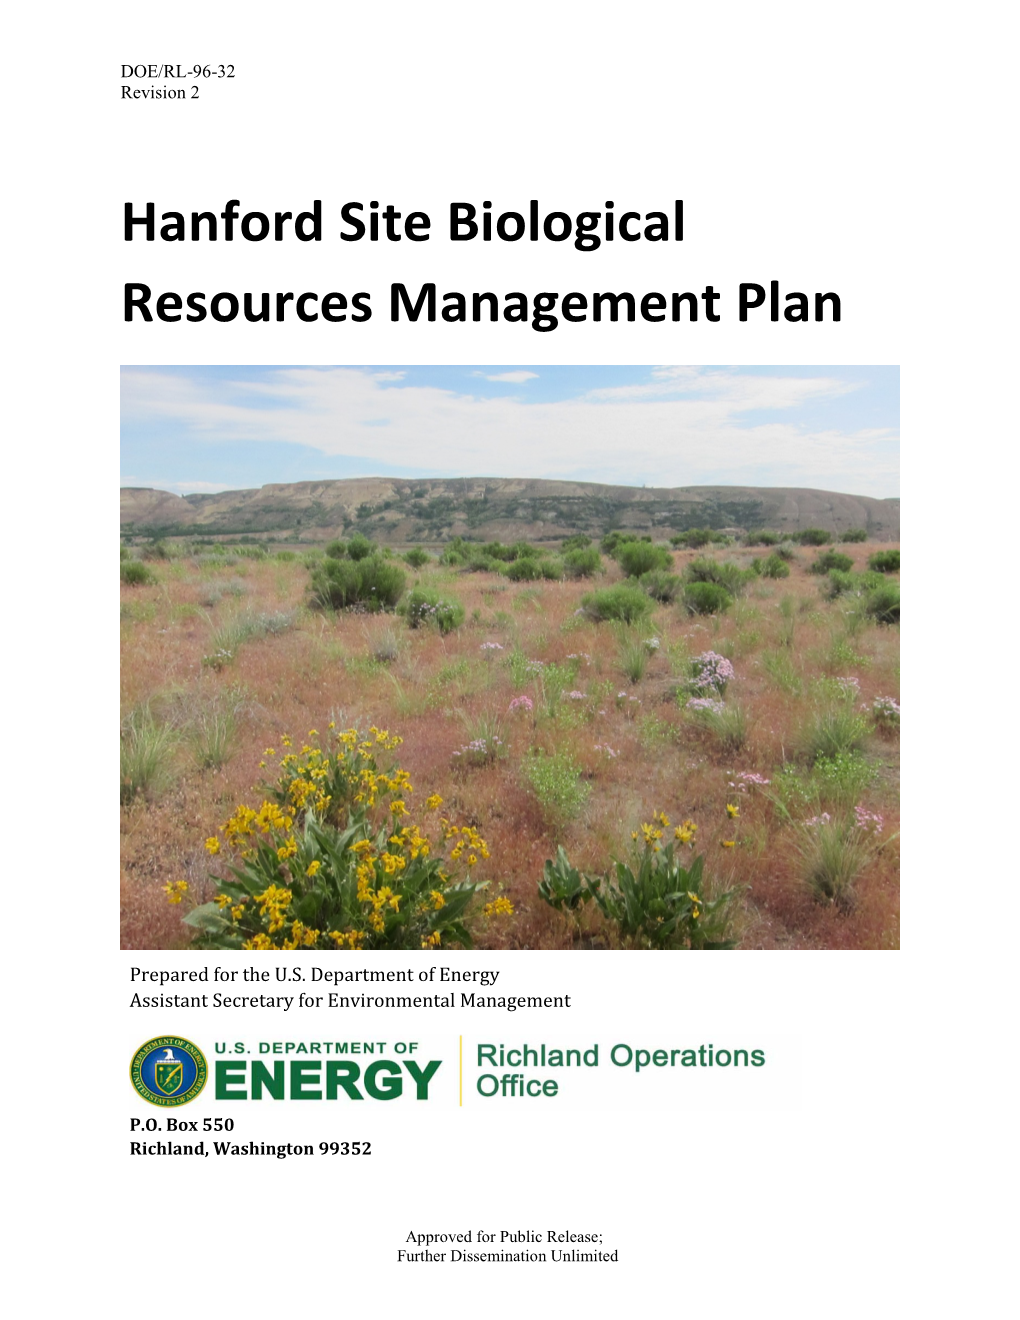 Hanford Site Biological Resources Management Plan